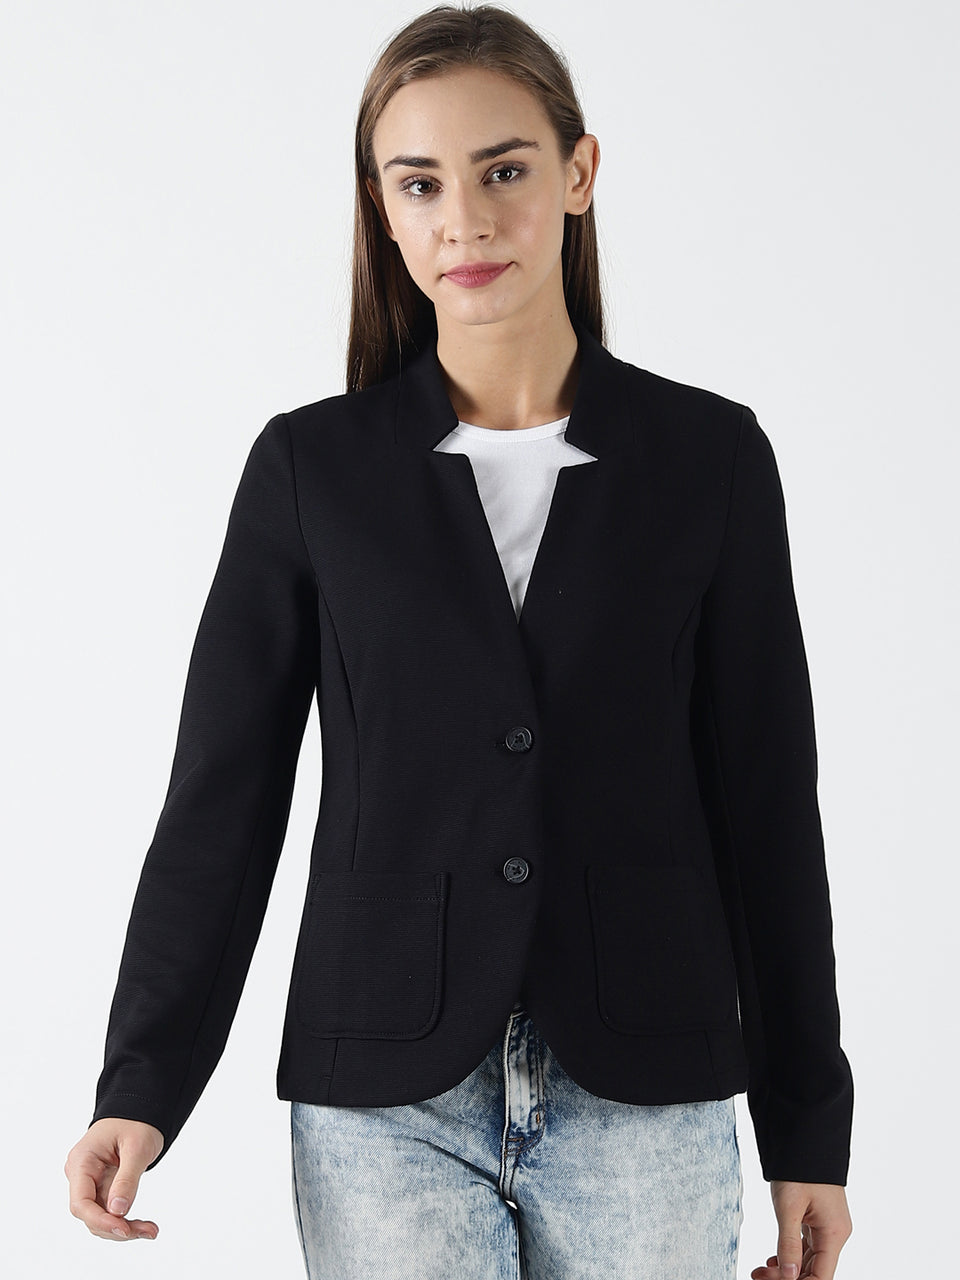 Buy dark black full sleeve solid women's jackets online india -urgear ...